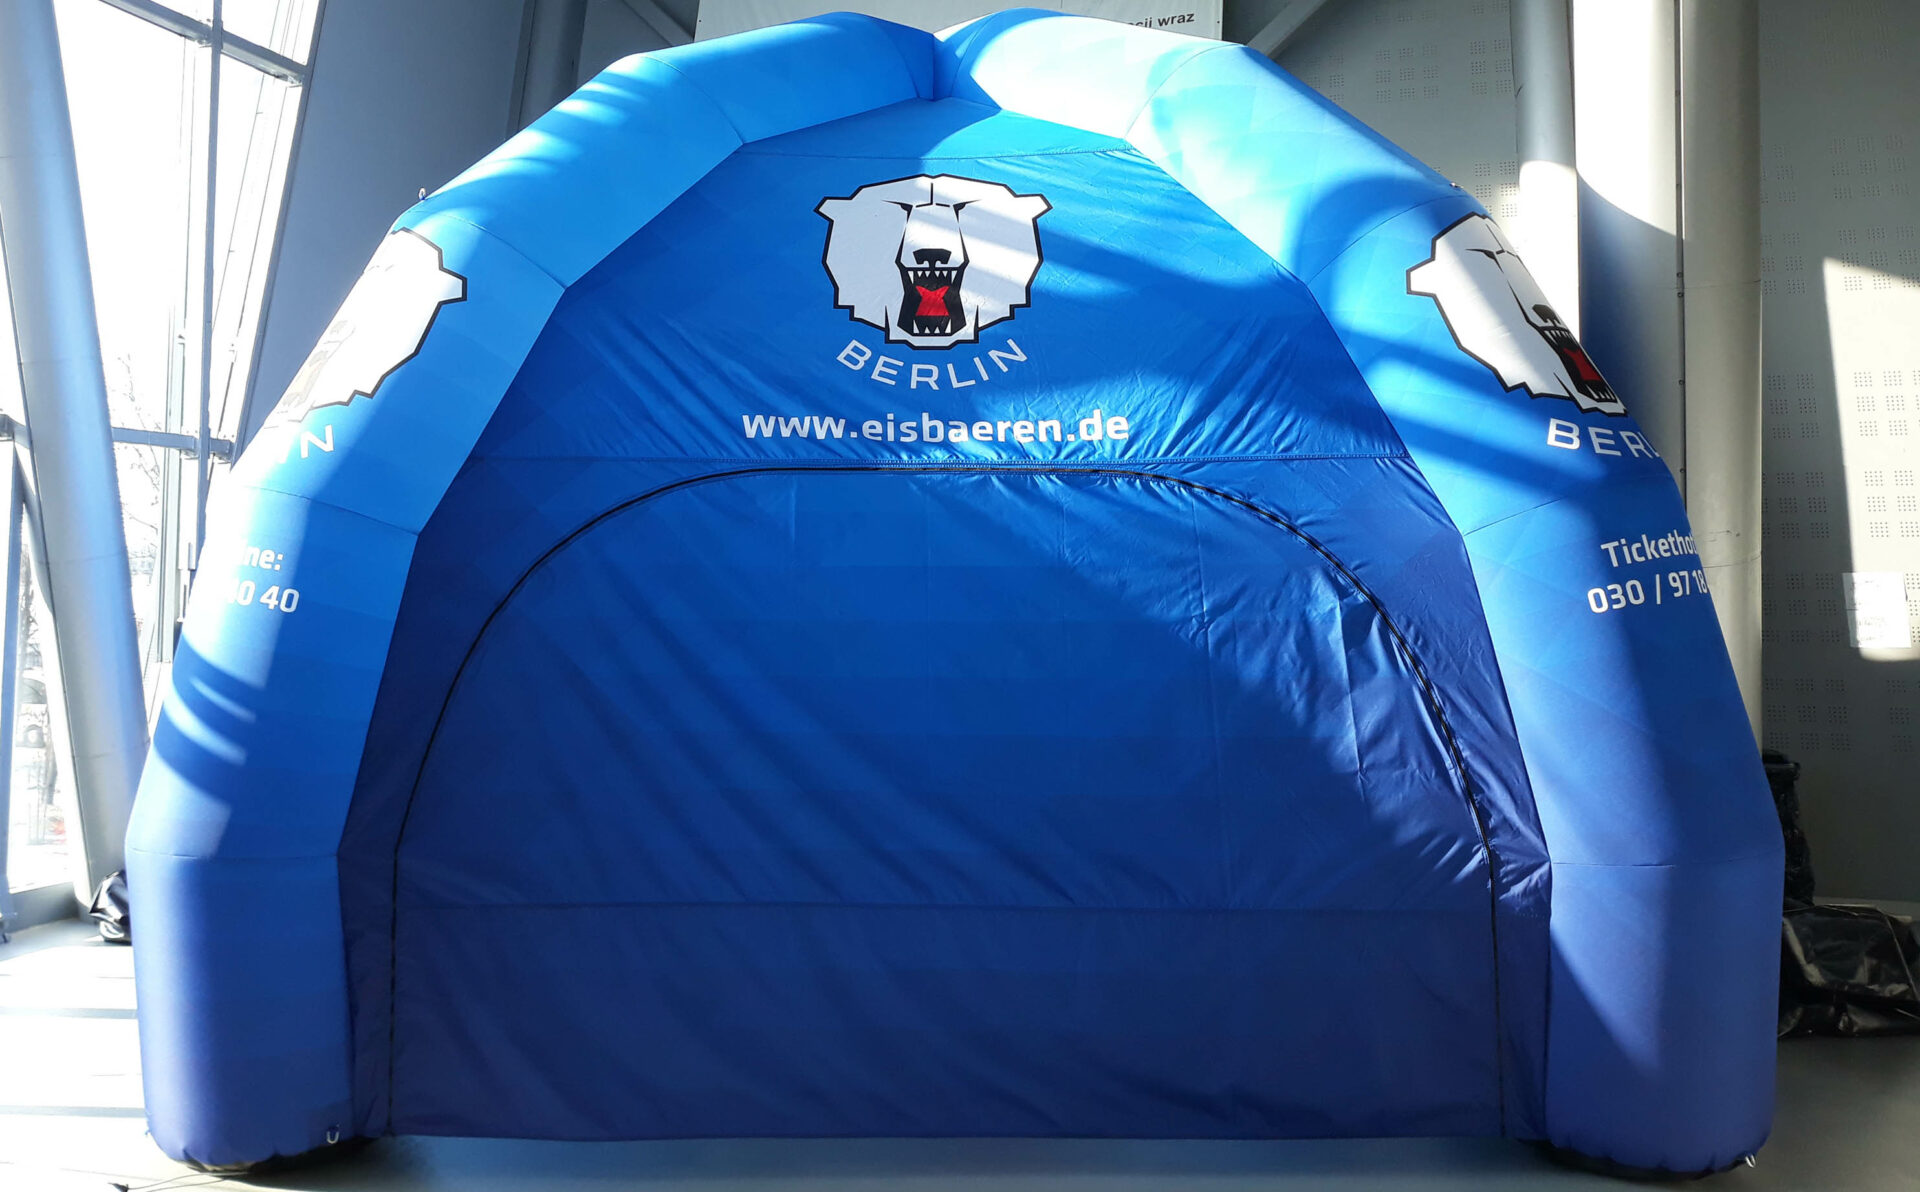 Eisbären-Berlin-inflatable-spider-tent-visual